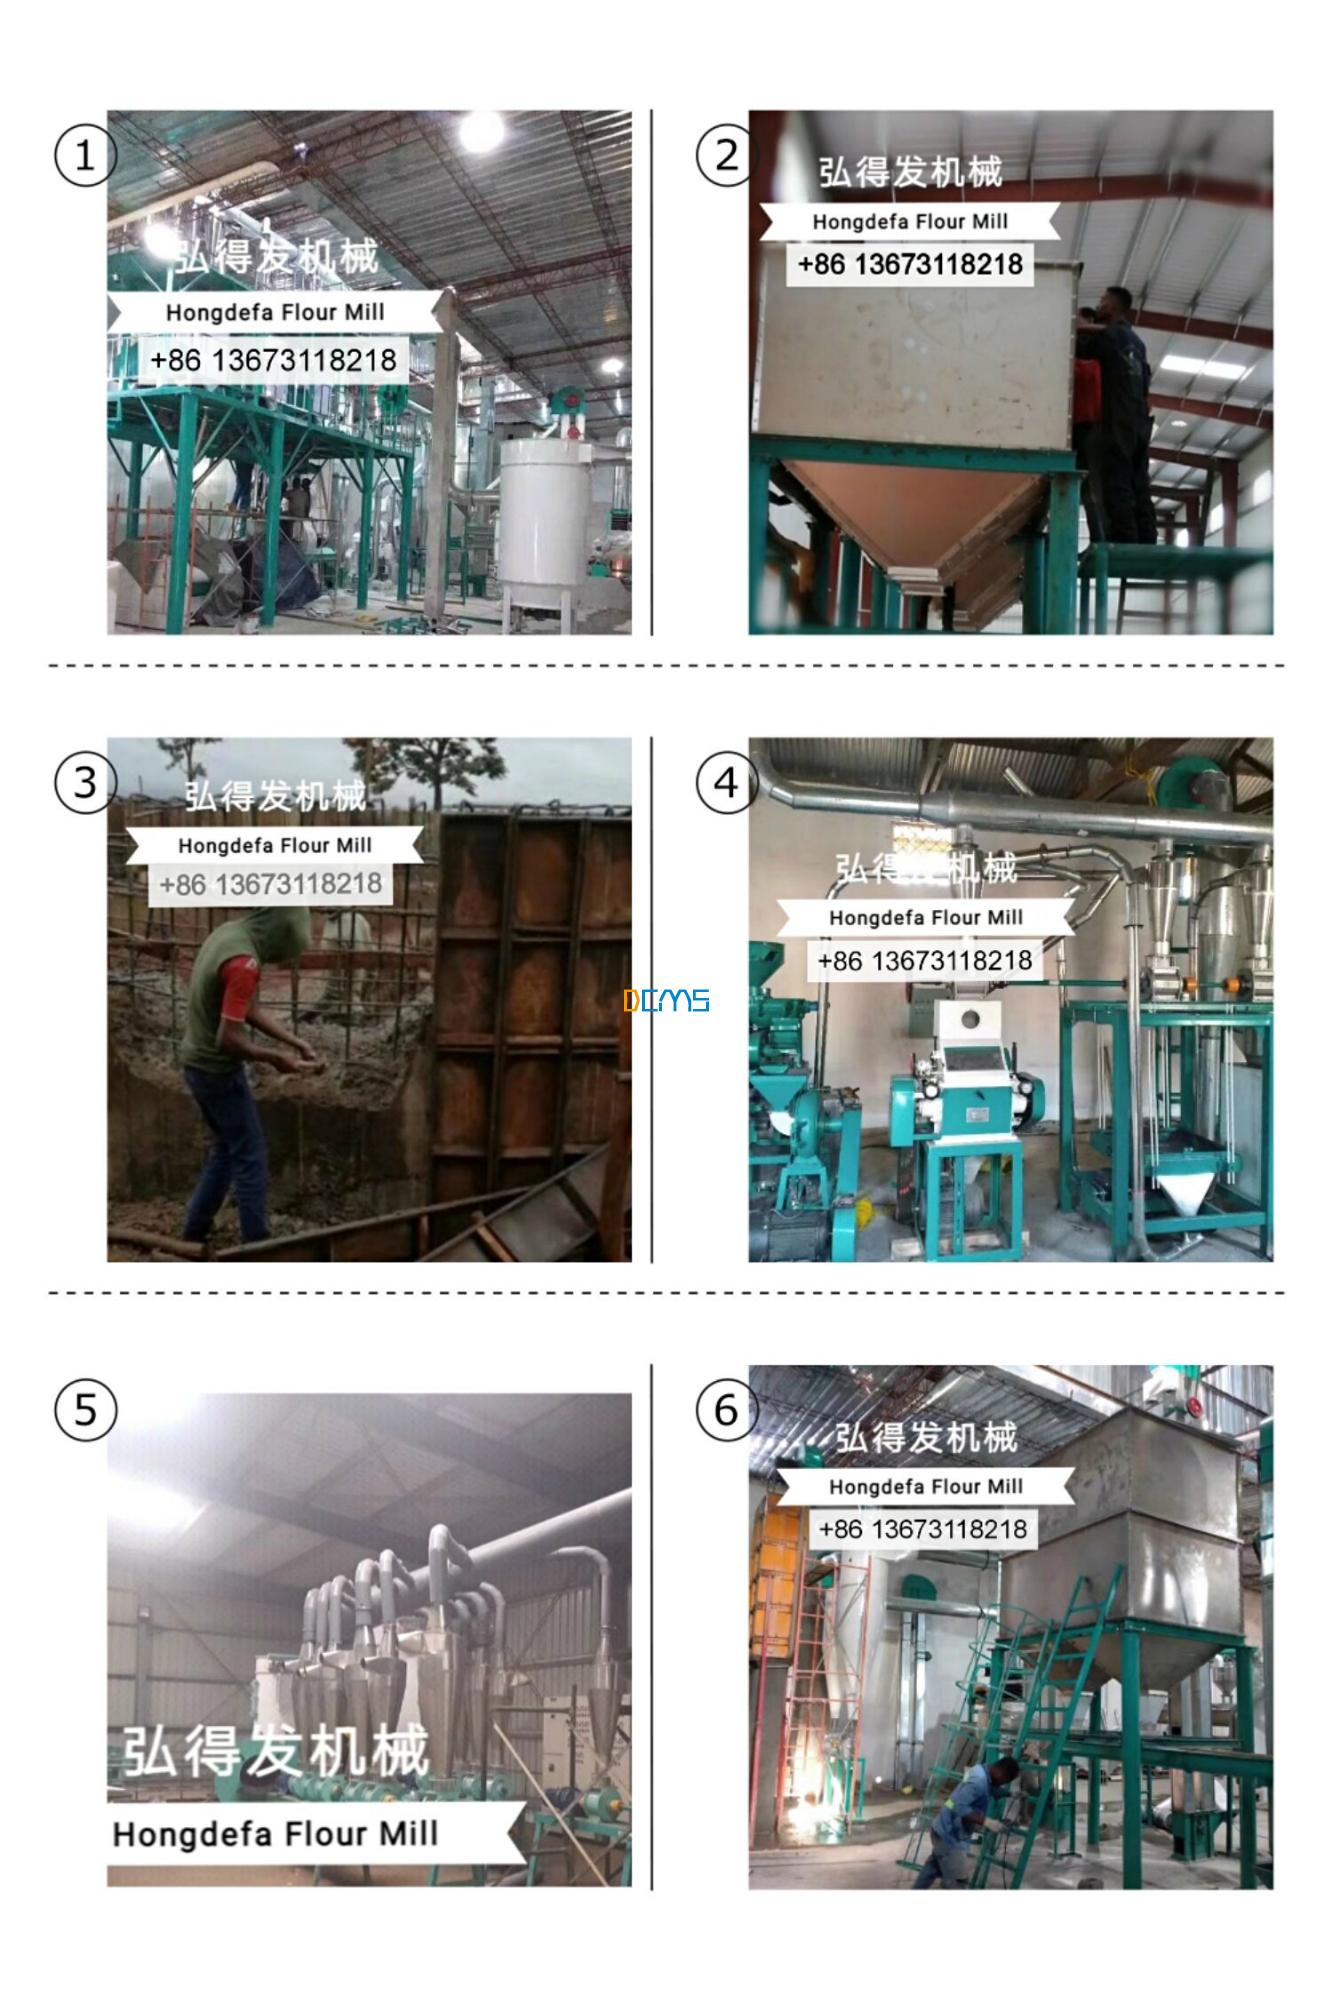 hongdefa flour milling machine engineers install photos